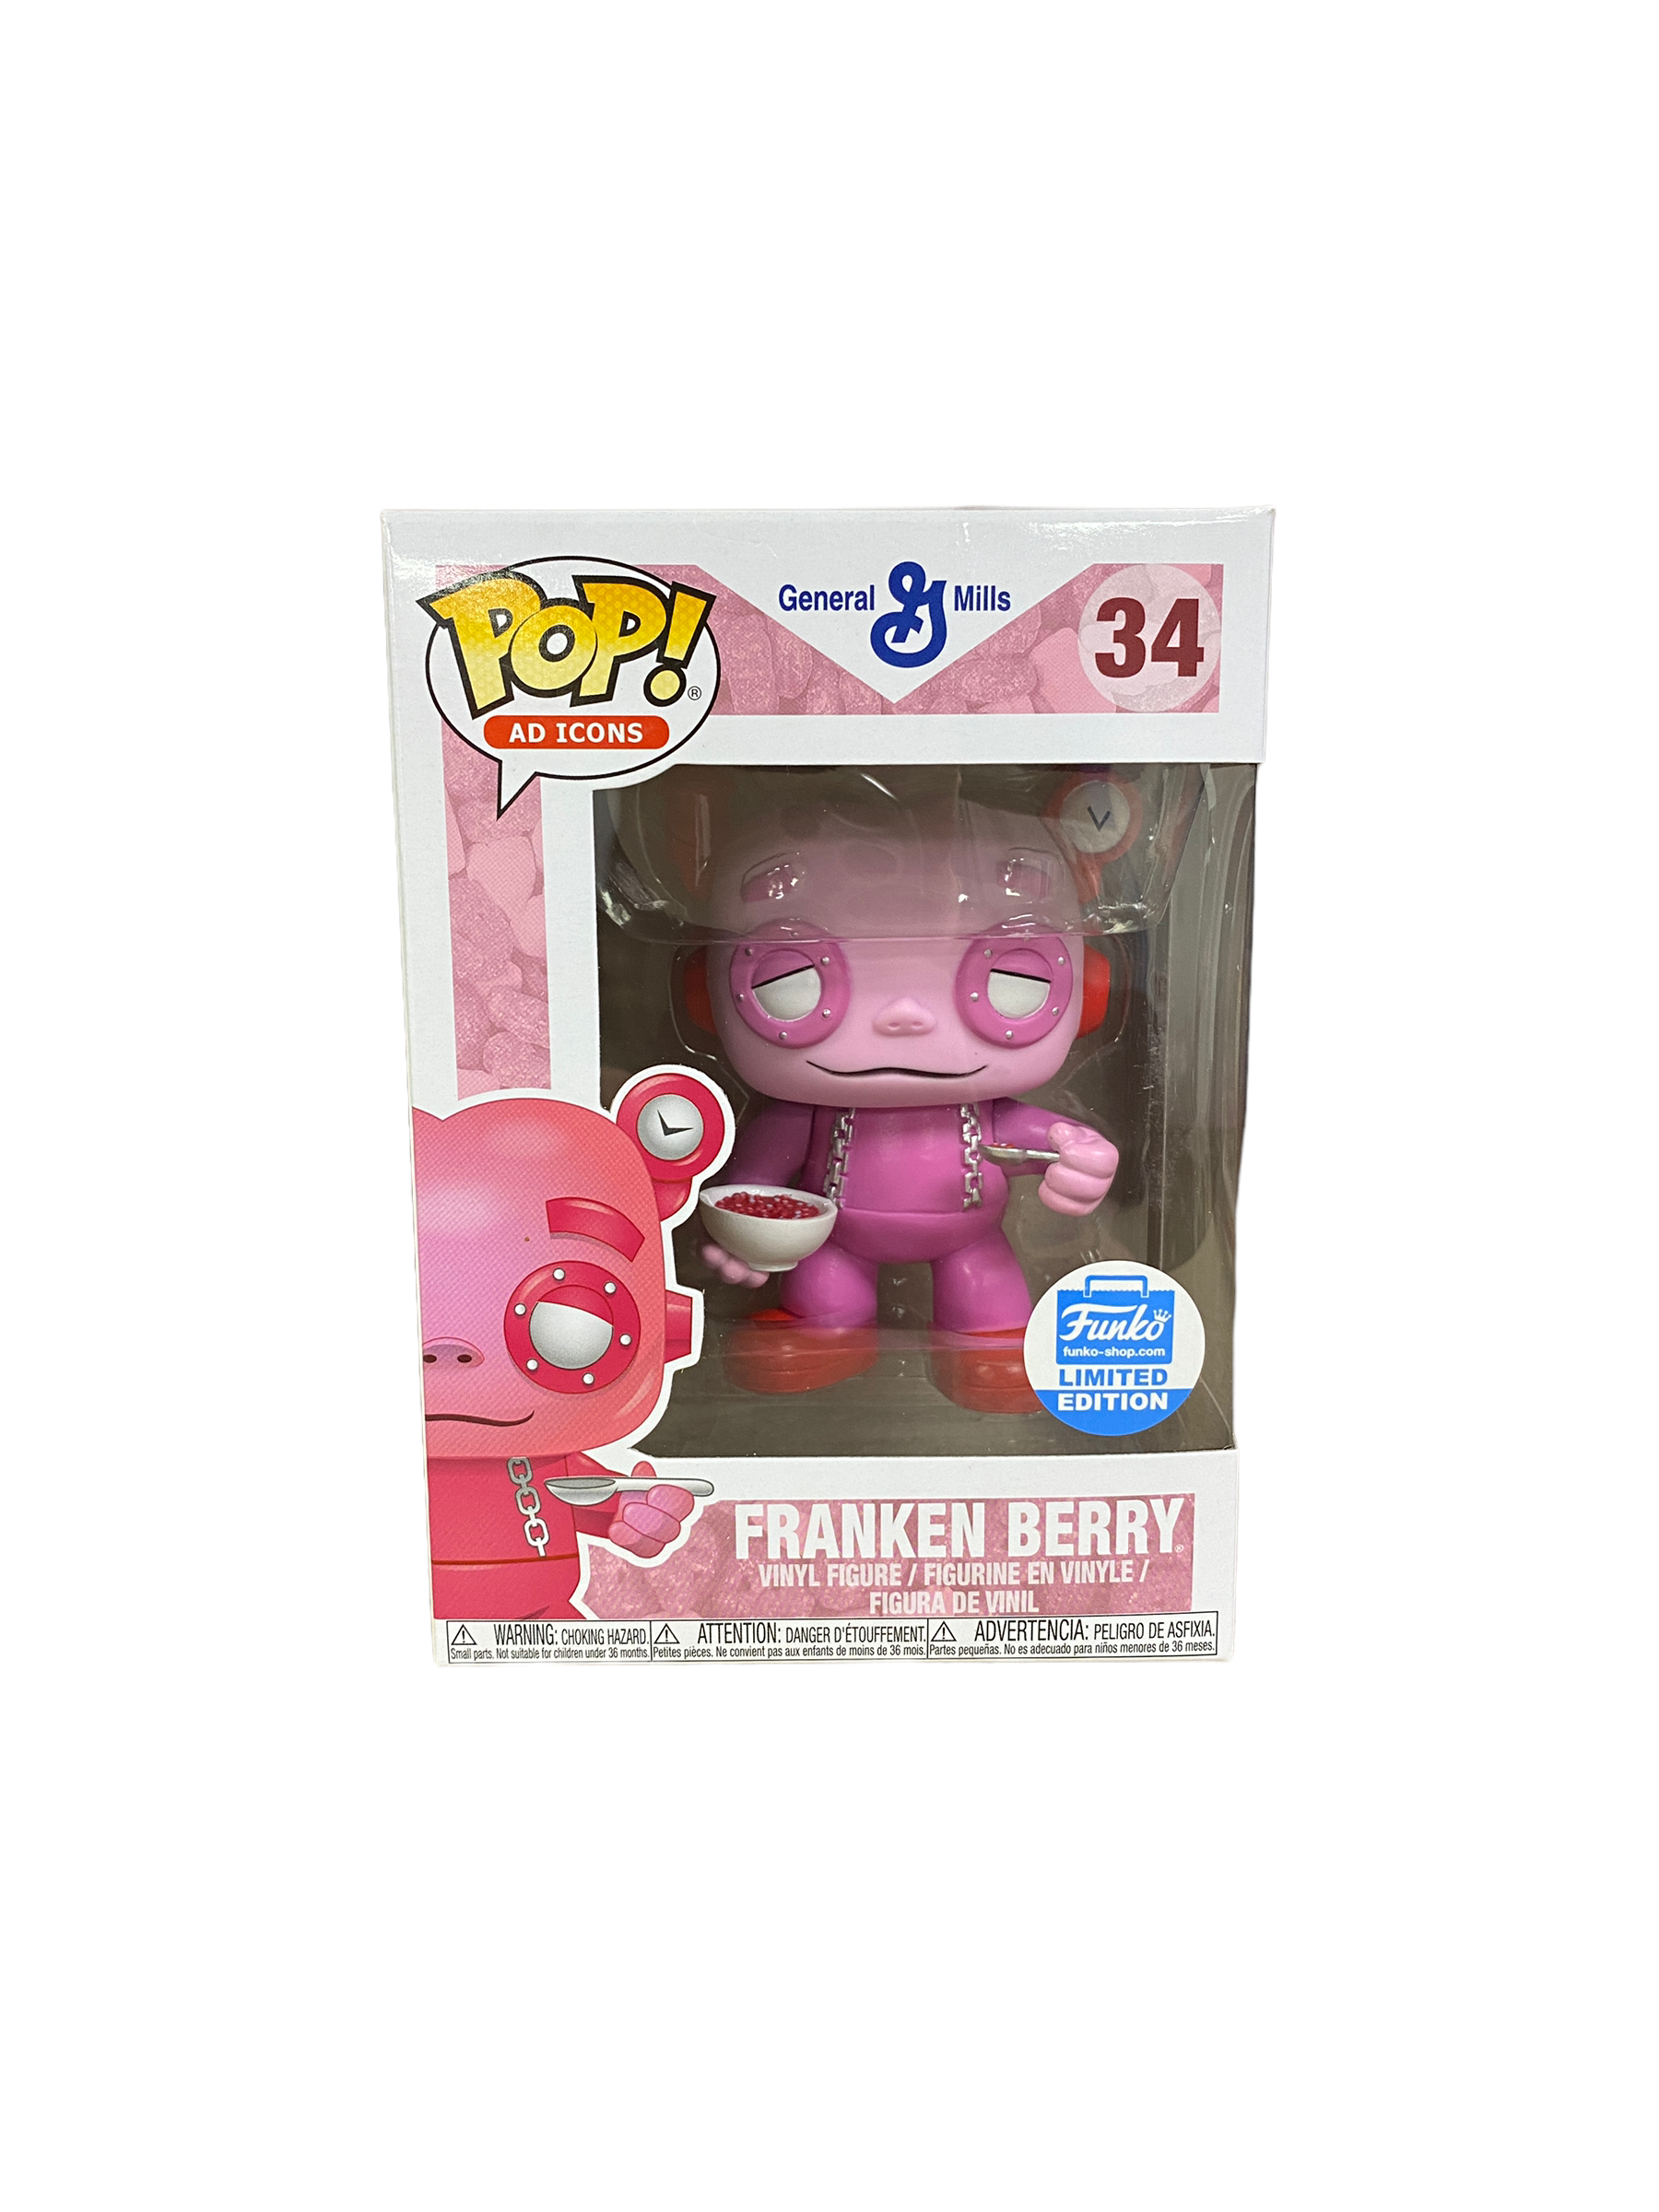 Franken Berry #34 (w/Cereal) Funko Pop! - Ad Icons - Funko Shop Exclusive - Condition 8.5/10